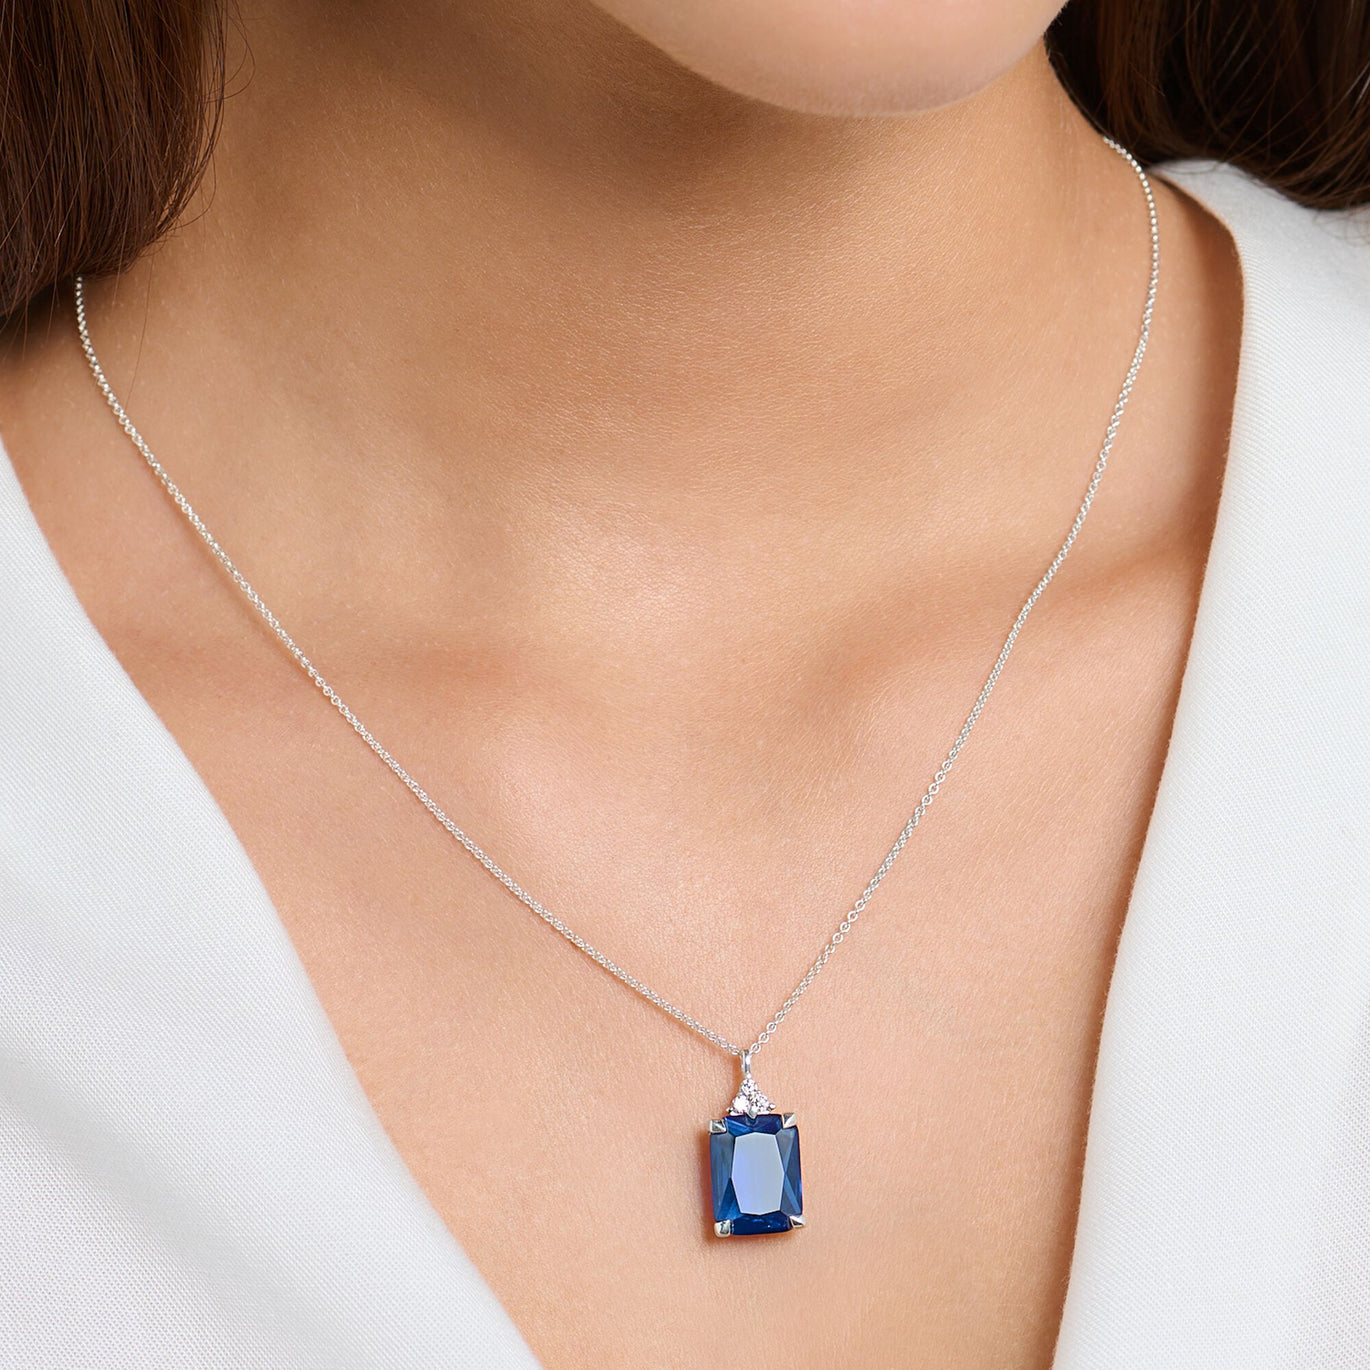 Thomas Sabo Blue Stone Necklace with White Cubic Zirconia